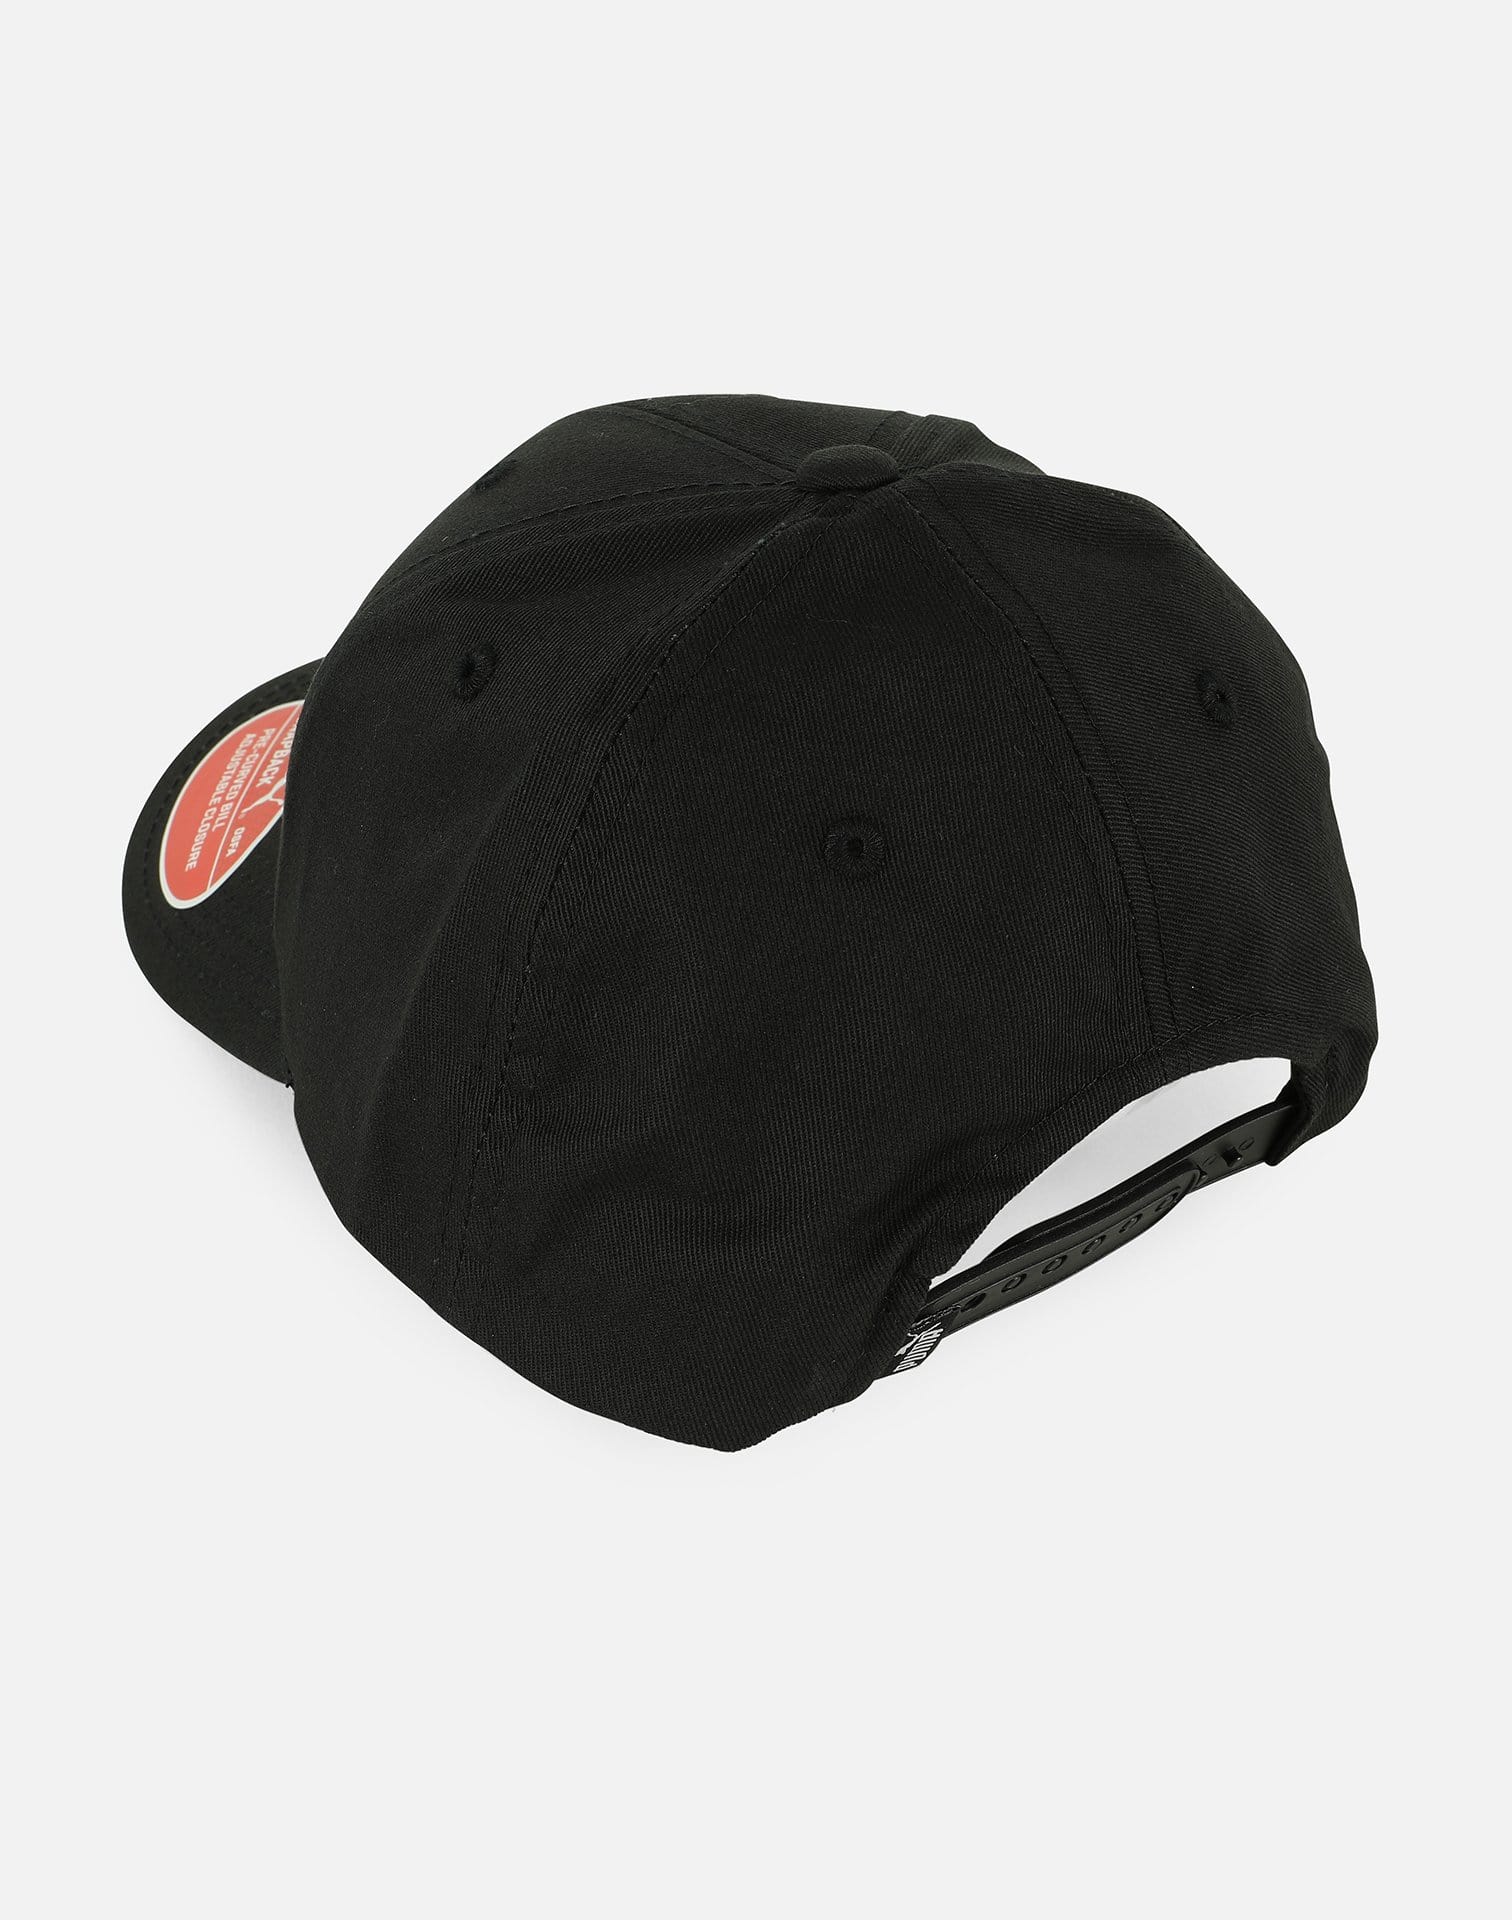 PUMA Mainline Snapback Hat